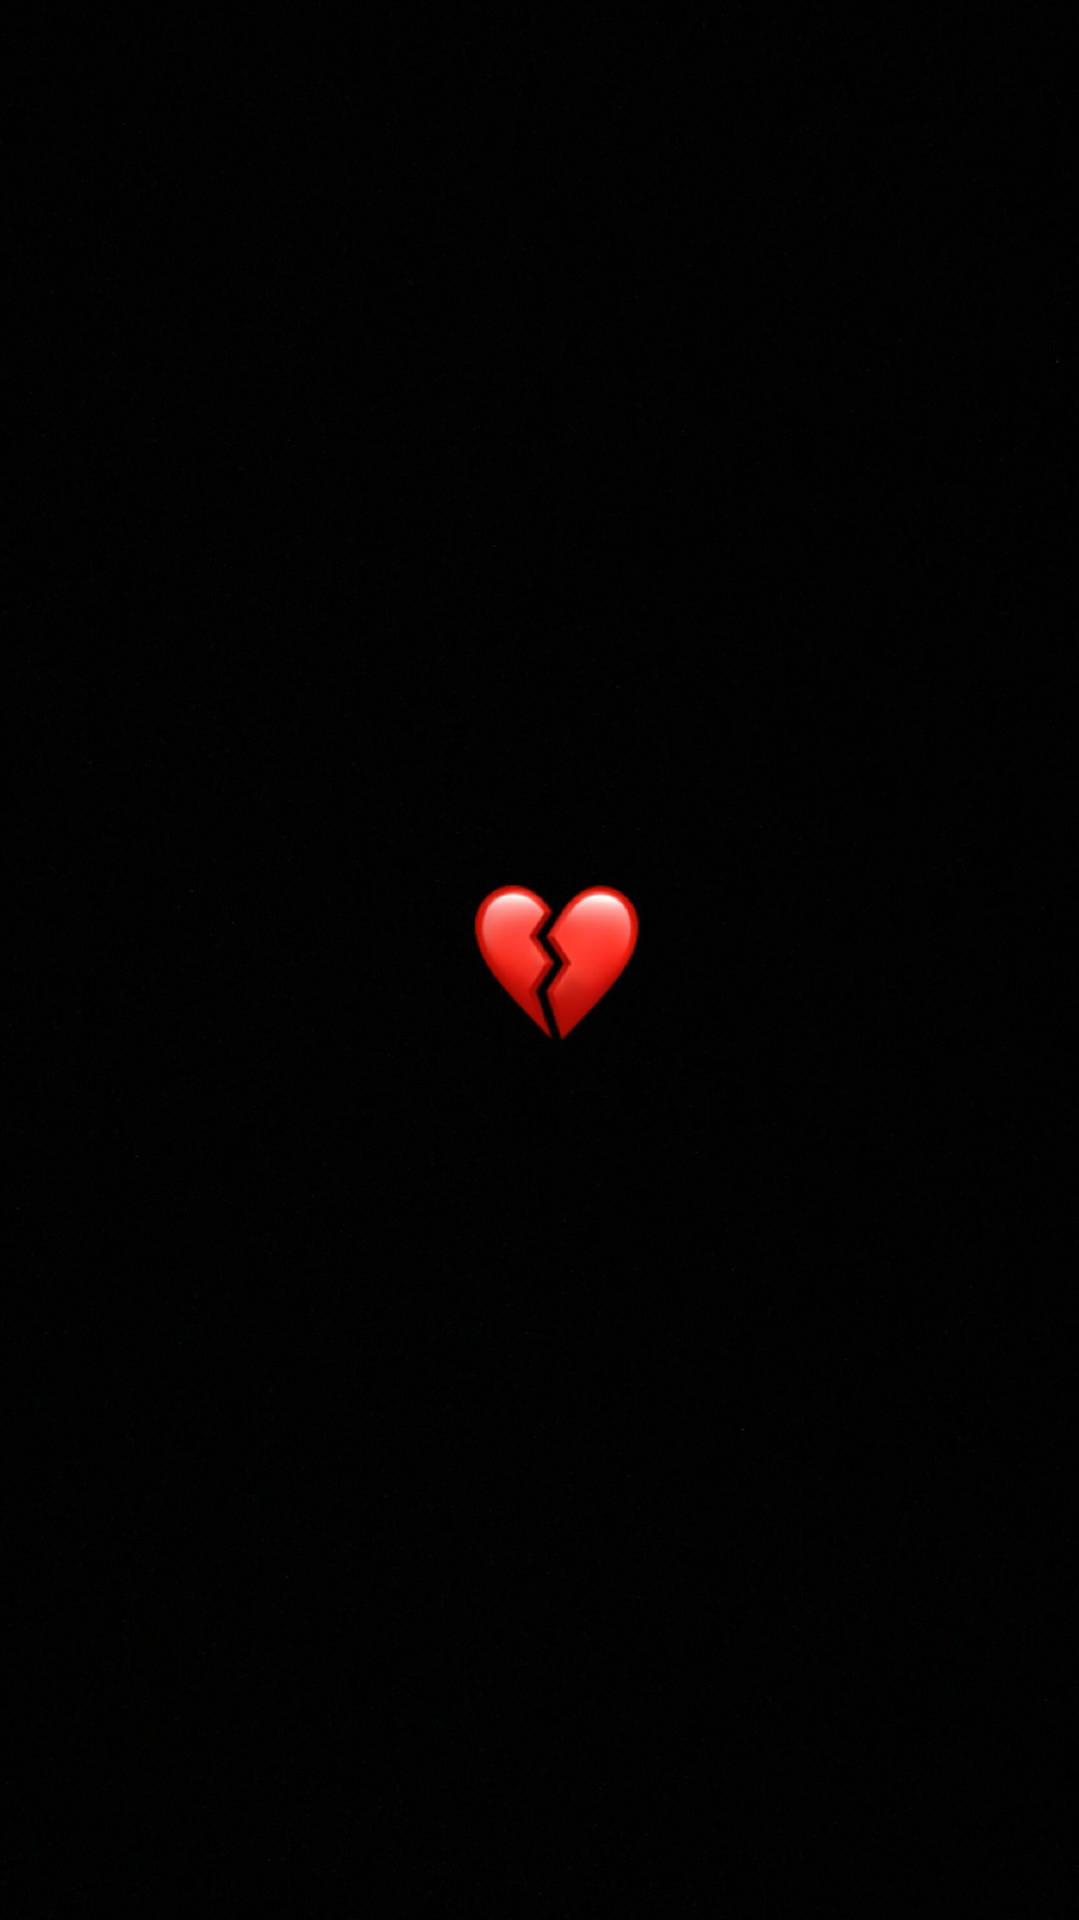 Minimalistic Red Broken Heart Wallpaper